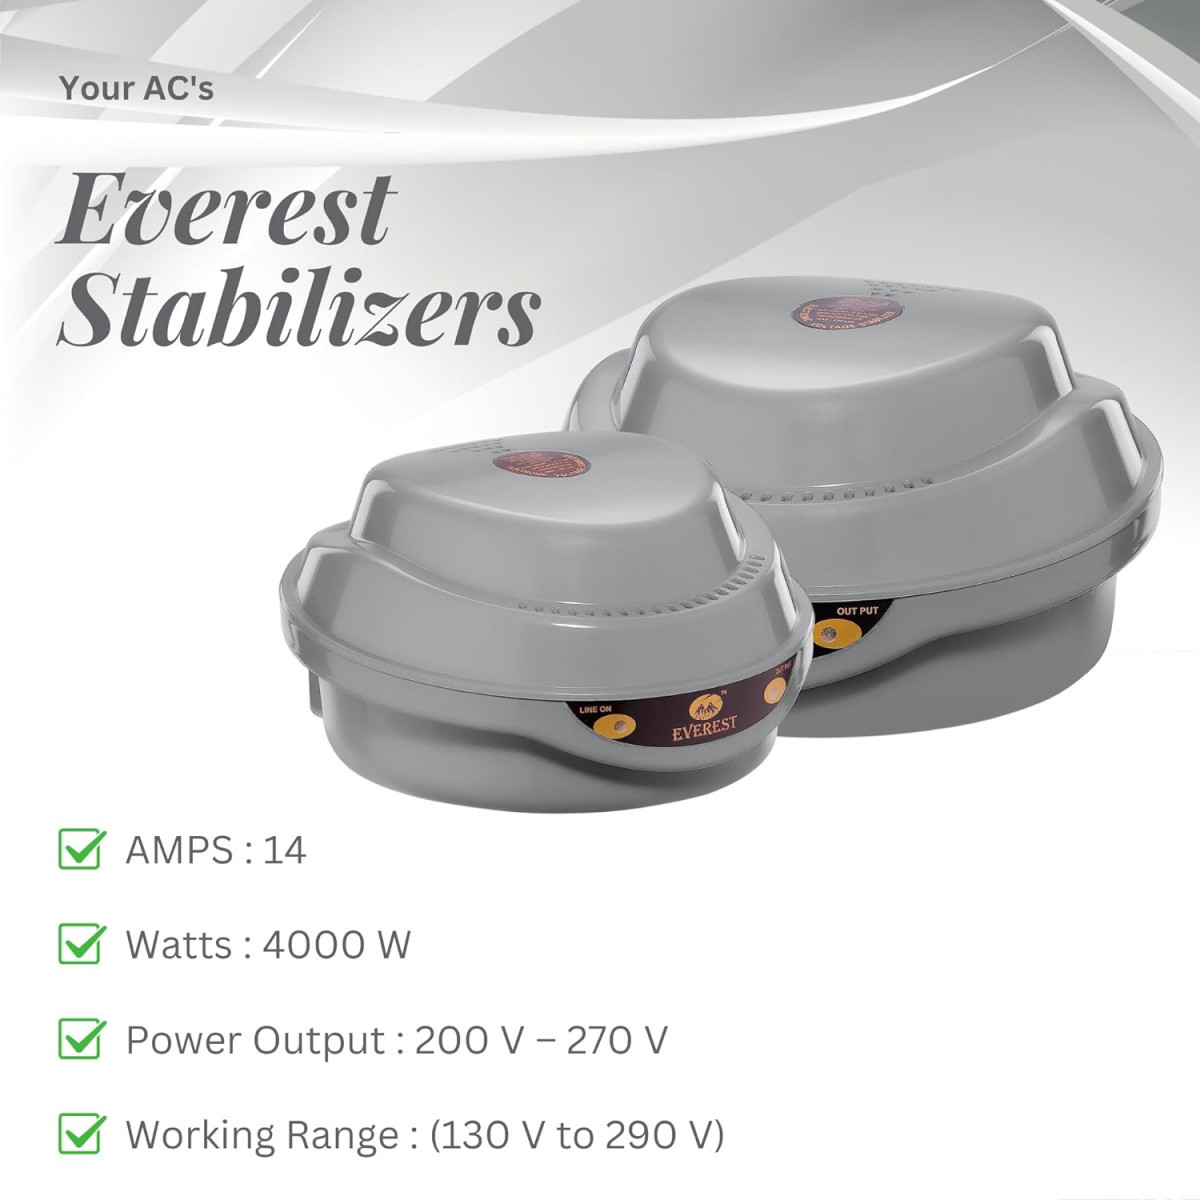 Everest ABS Body EPS 50 Voltage Stabilizer Used for Refrigerator Upto 300 litres Working Range  130 V to 290 V Grey Colour